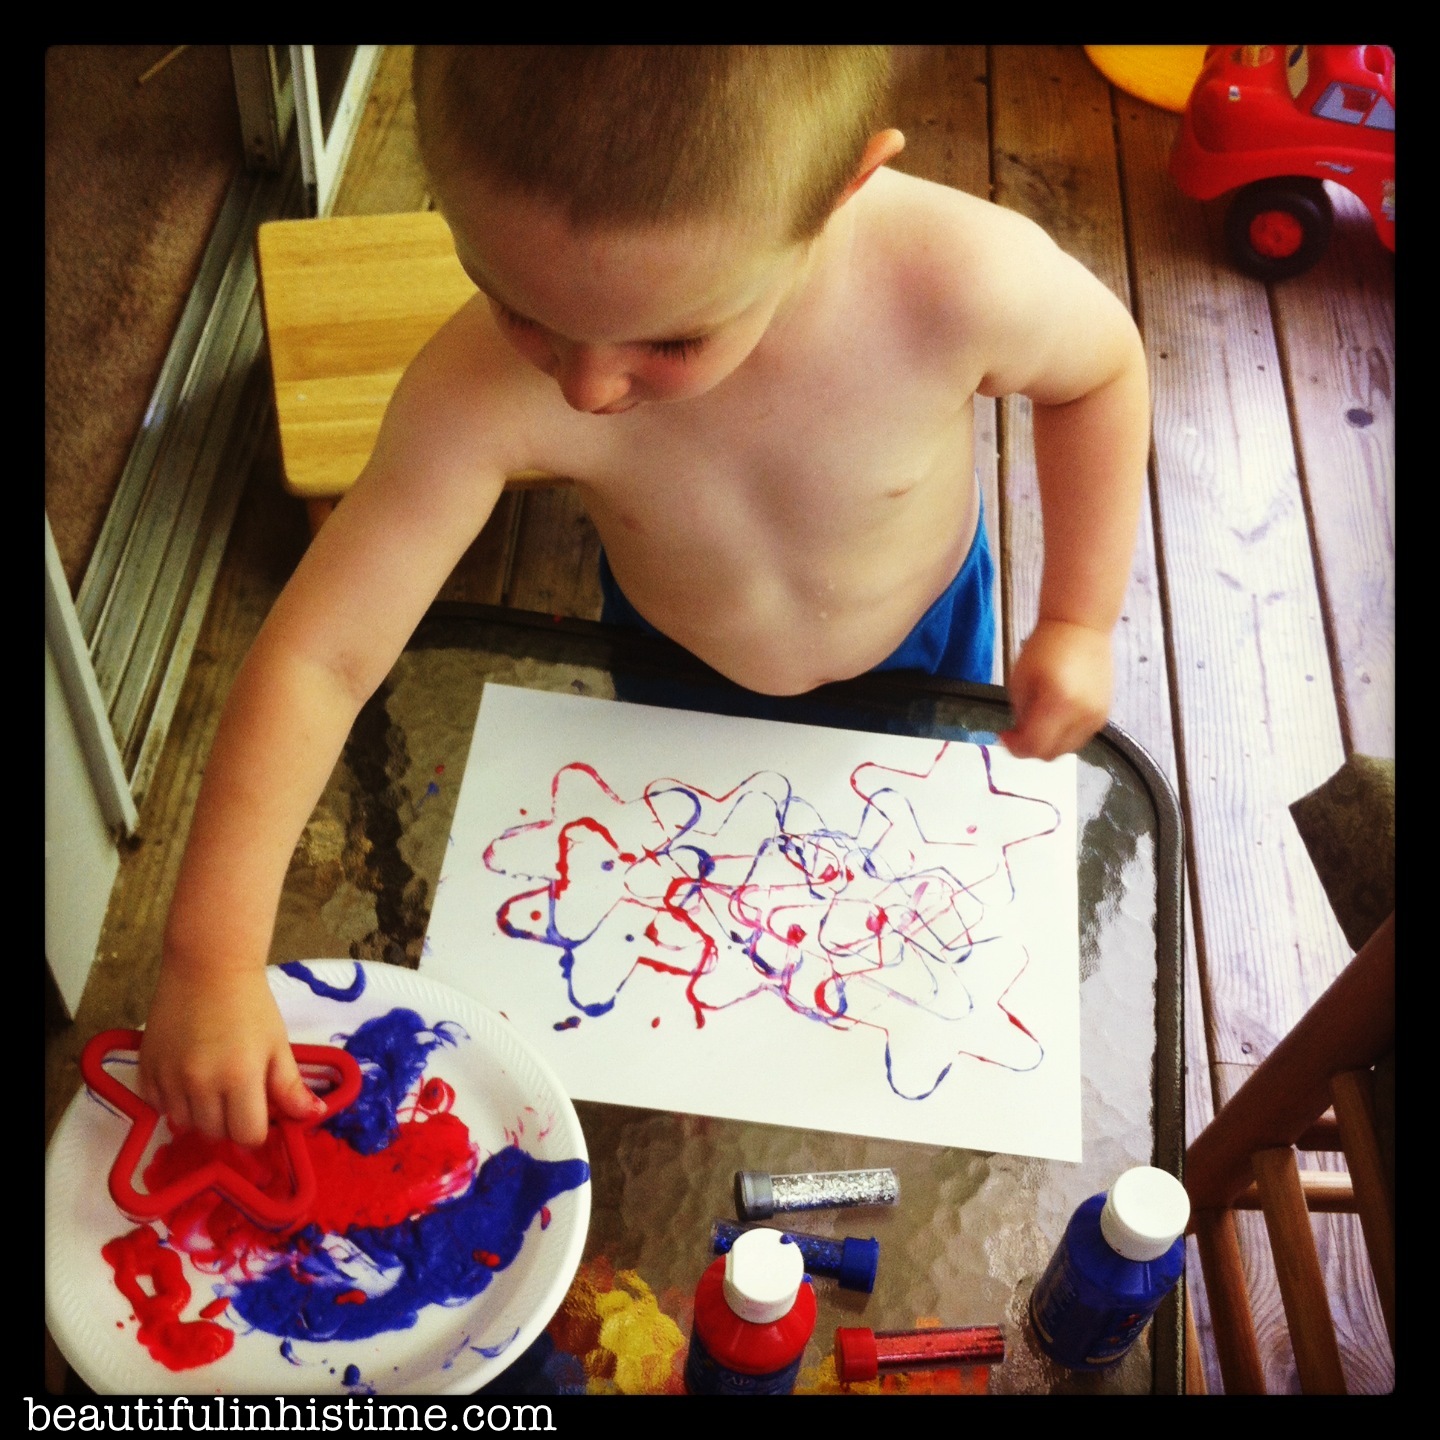 star cookie cutter painting #patriotic #preschool unit #4thofjuly #homeschool #independenceday